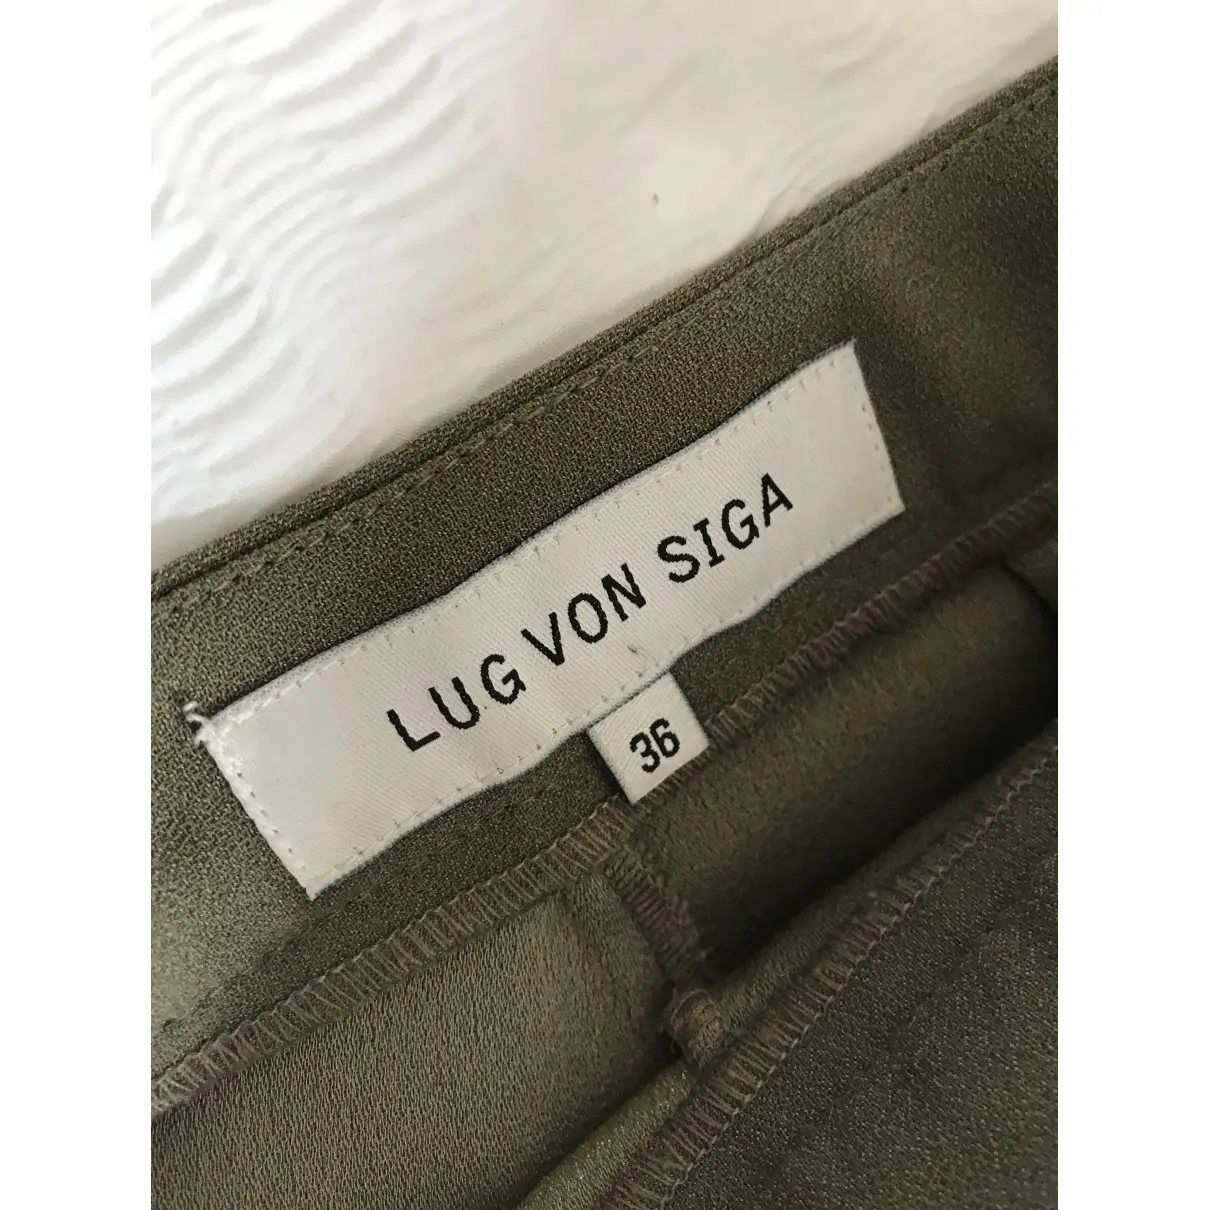 Luxury Lug Von Siga Trousers Women